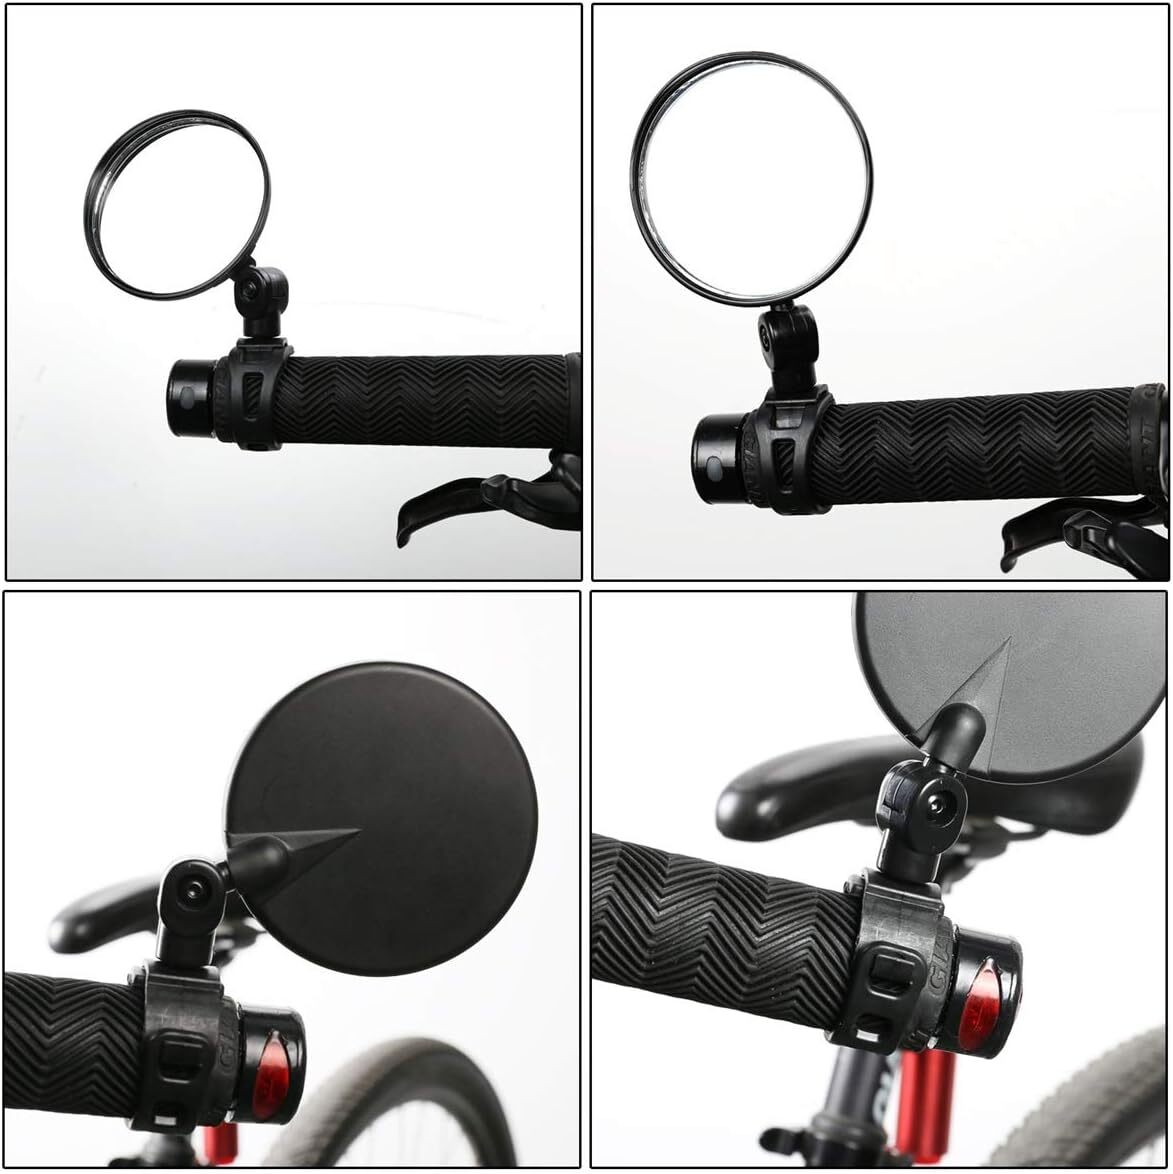 Hordlend]2個セット 自転車バックミラー 丸型 凸面 360度回転可能 広視野角 取り付け簡単 自転車ミラー サイクリング_画像3